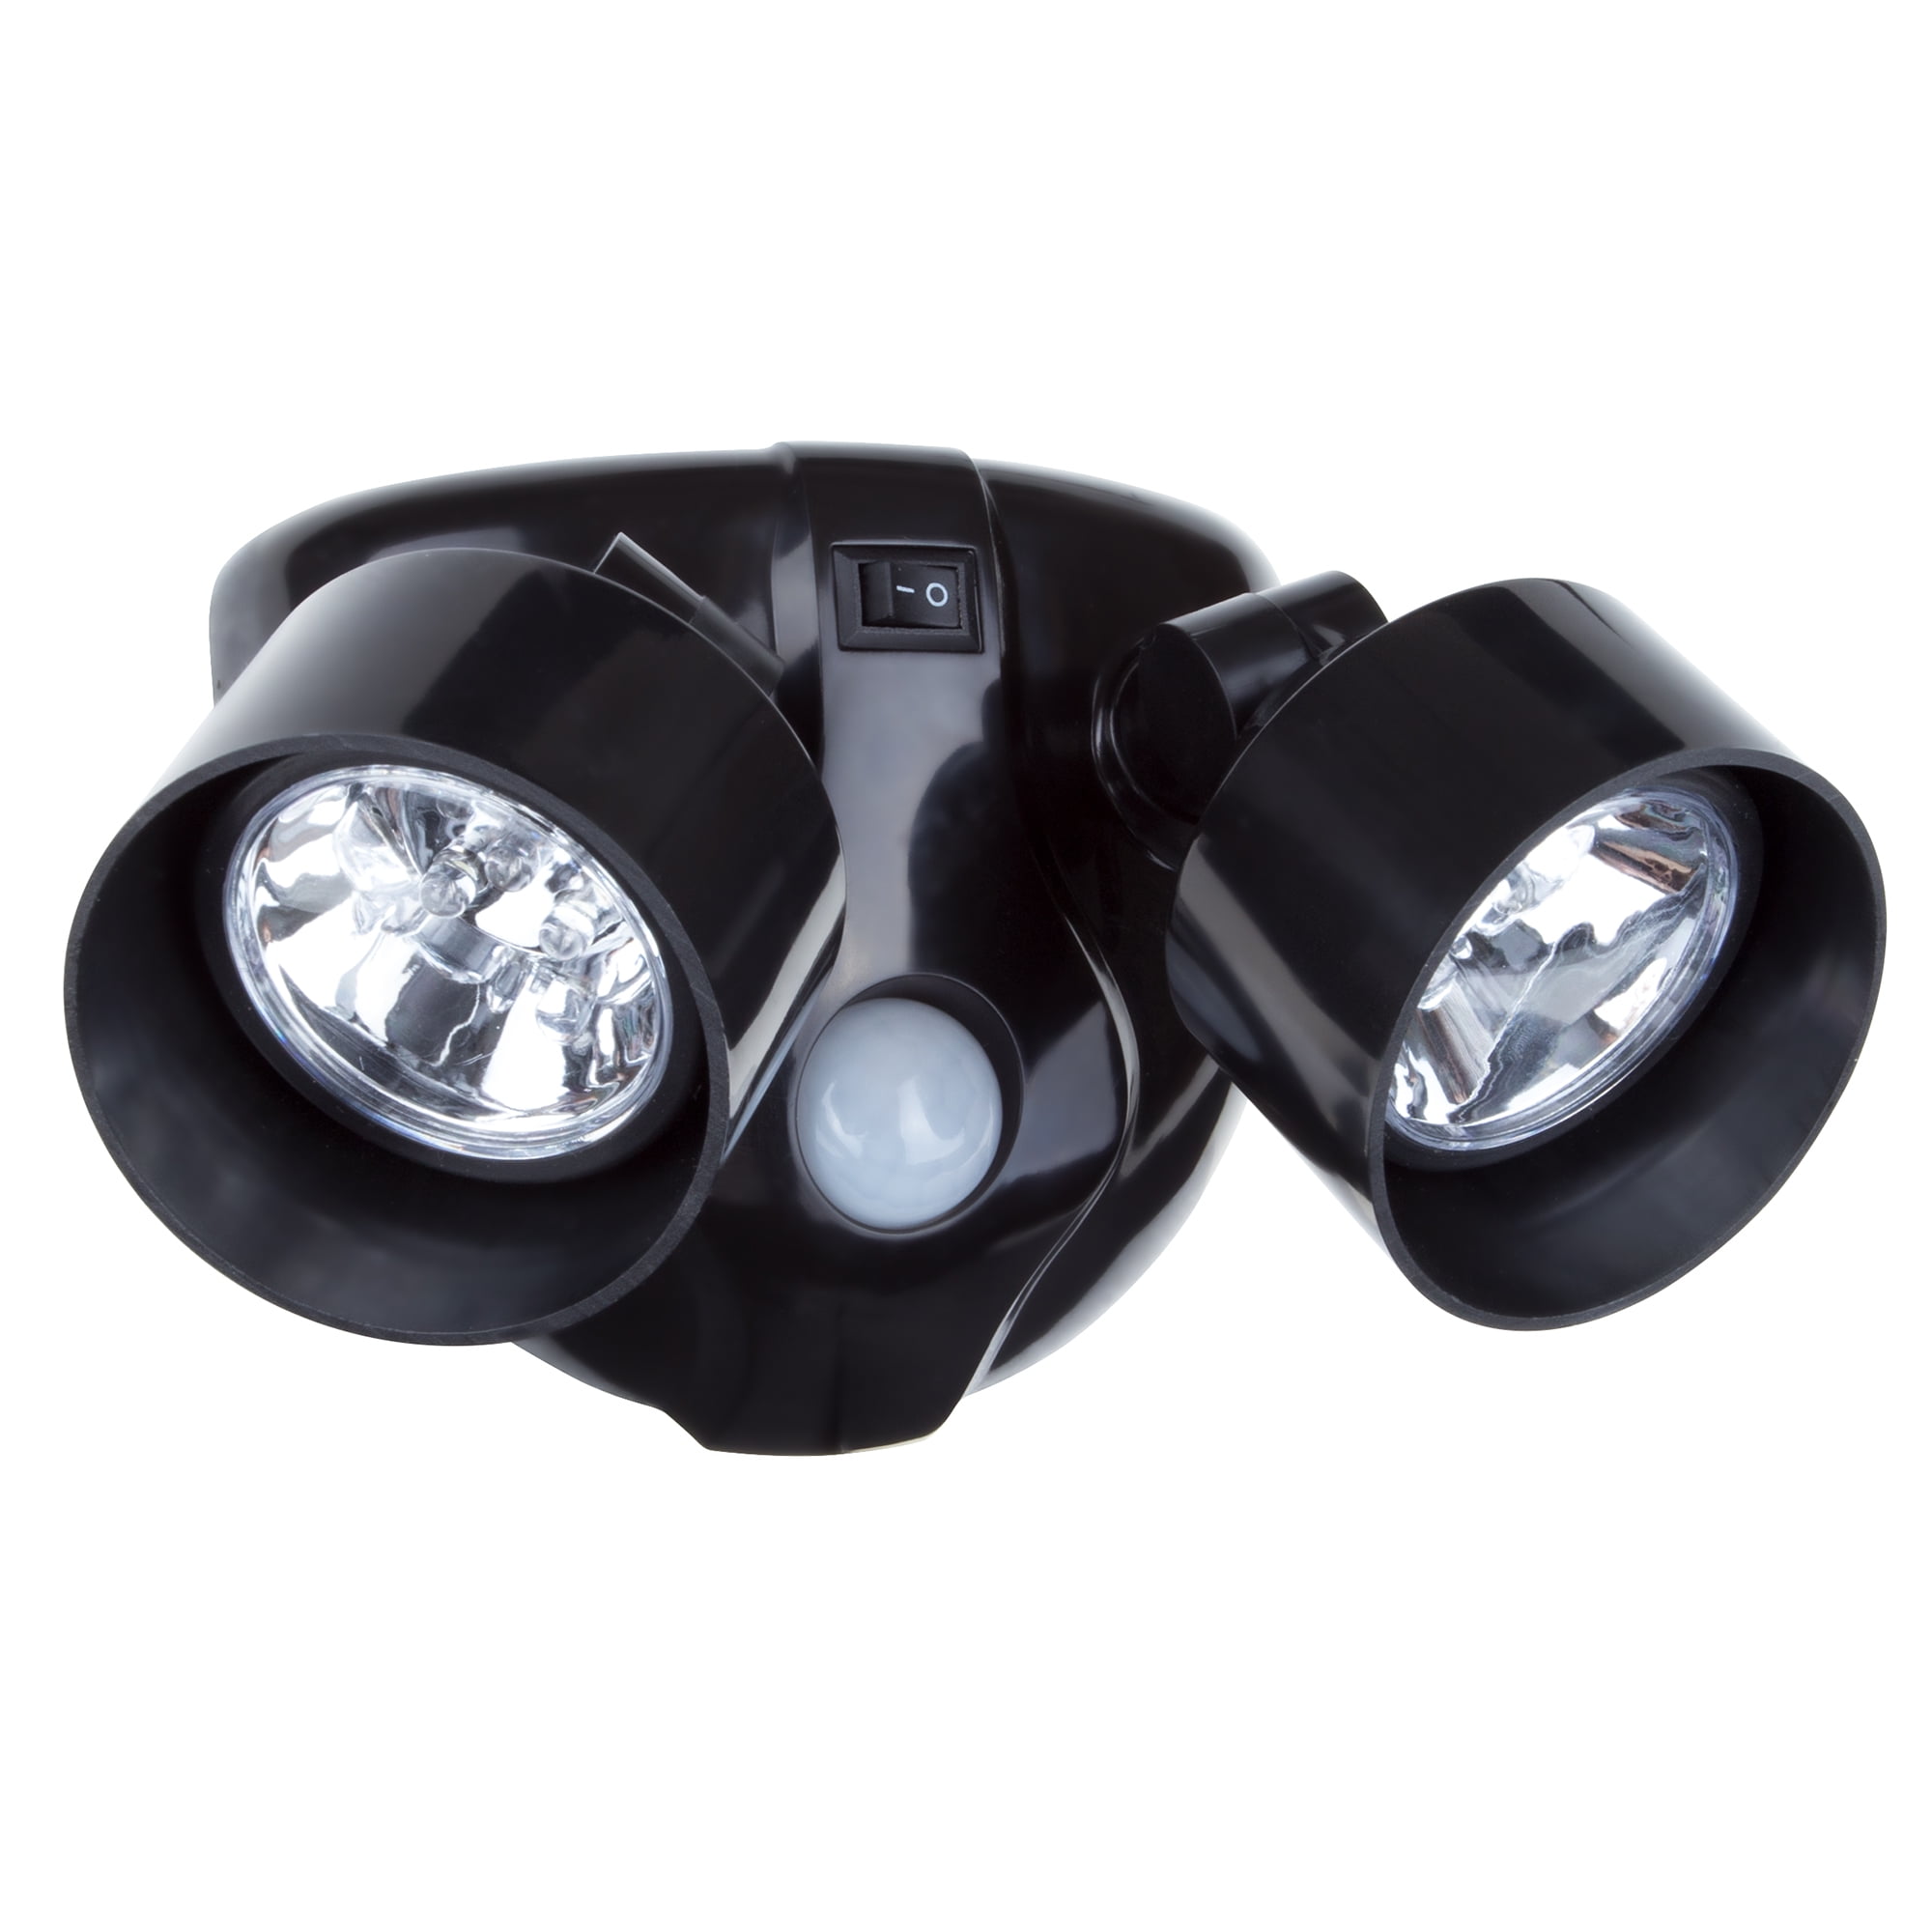 LED Motion Sensor Light Indoor Outdoor Emergency Security Wireless Night Light